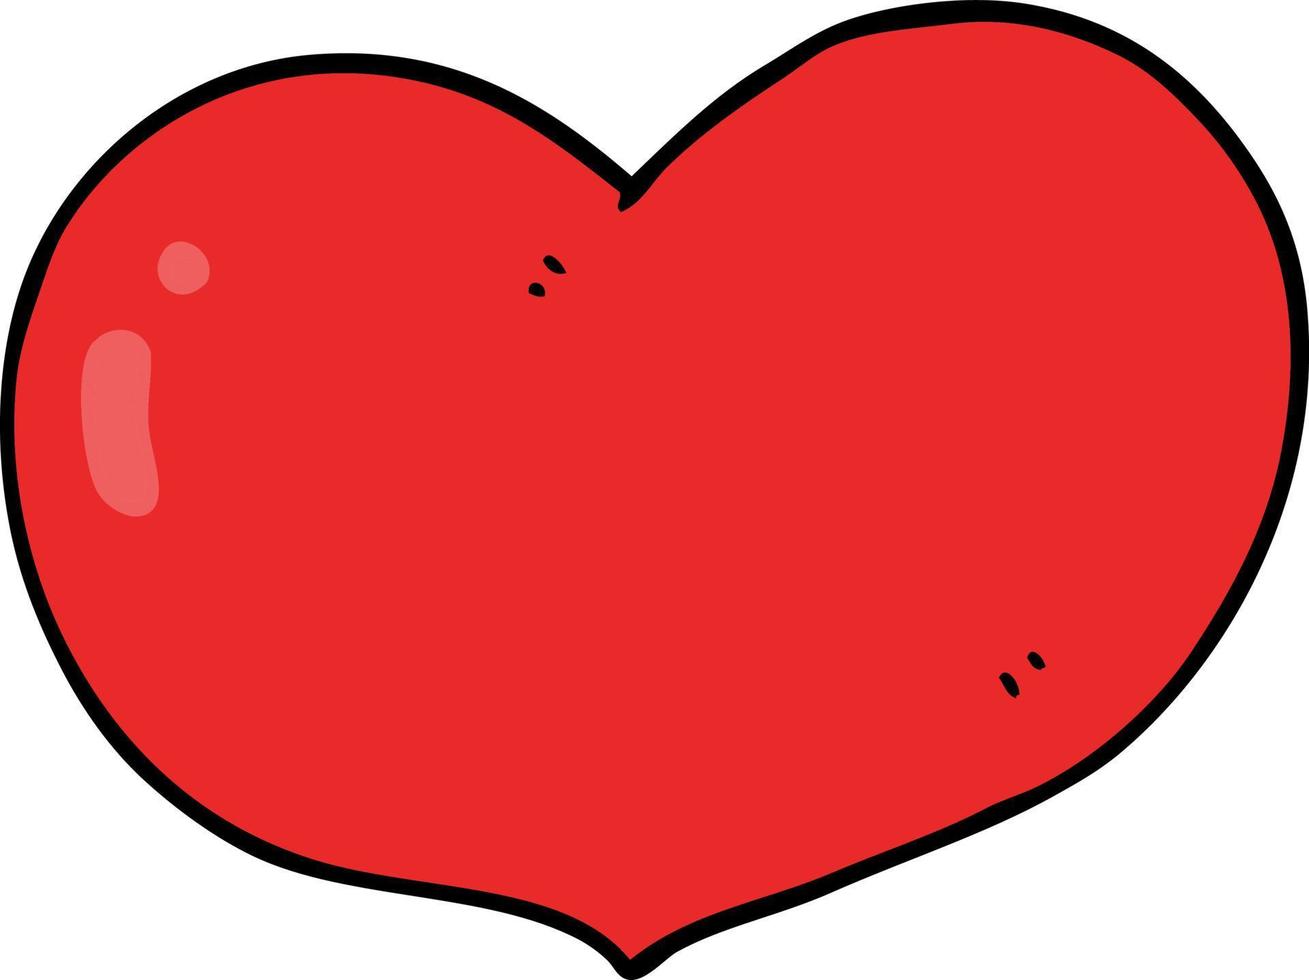 tecknad kärlek hjärta vektor